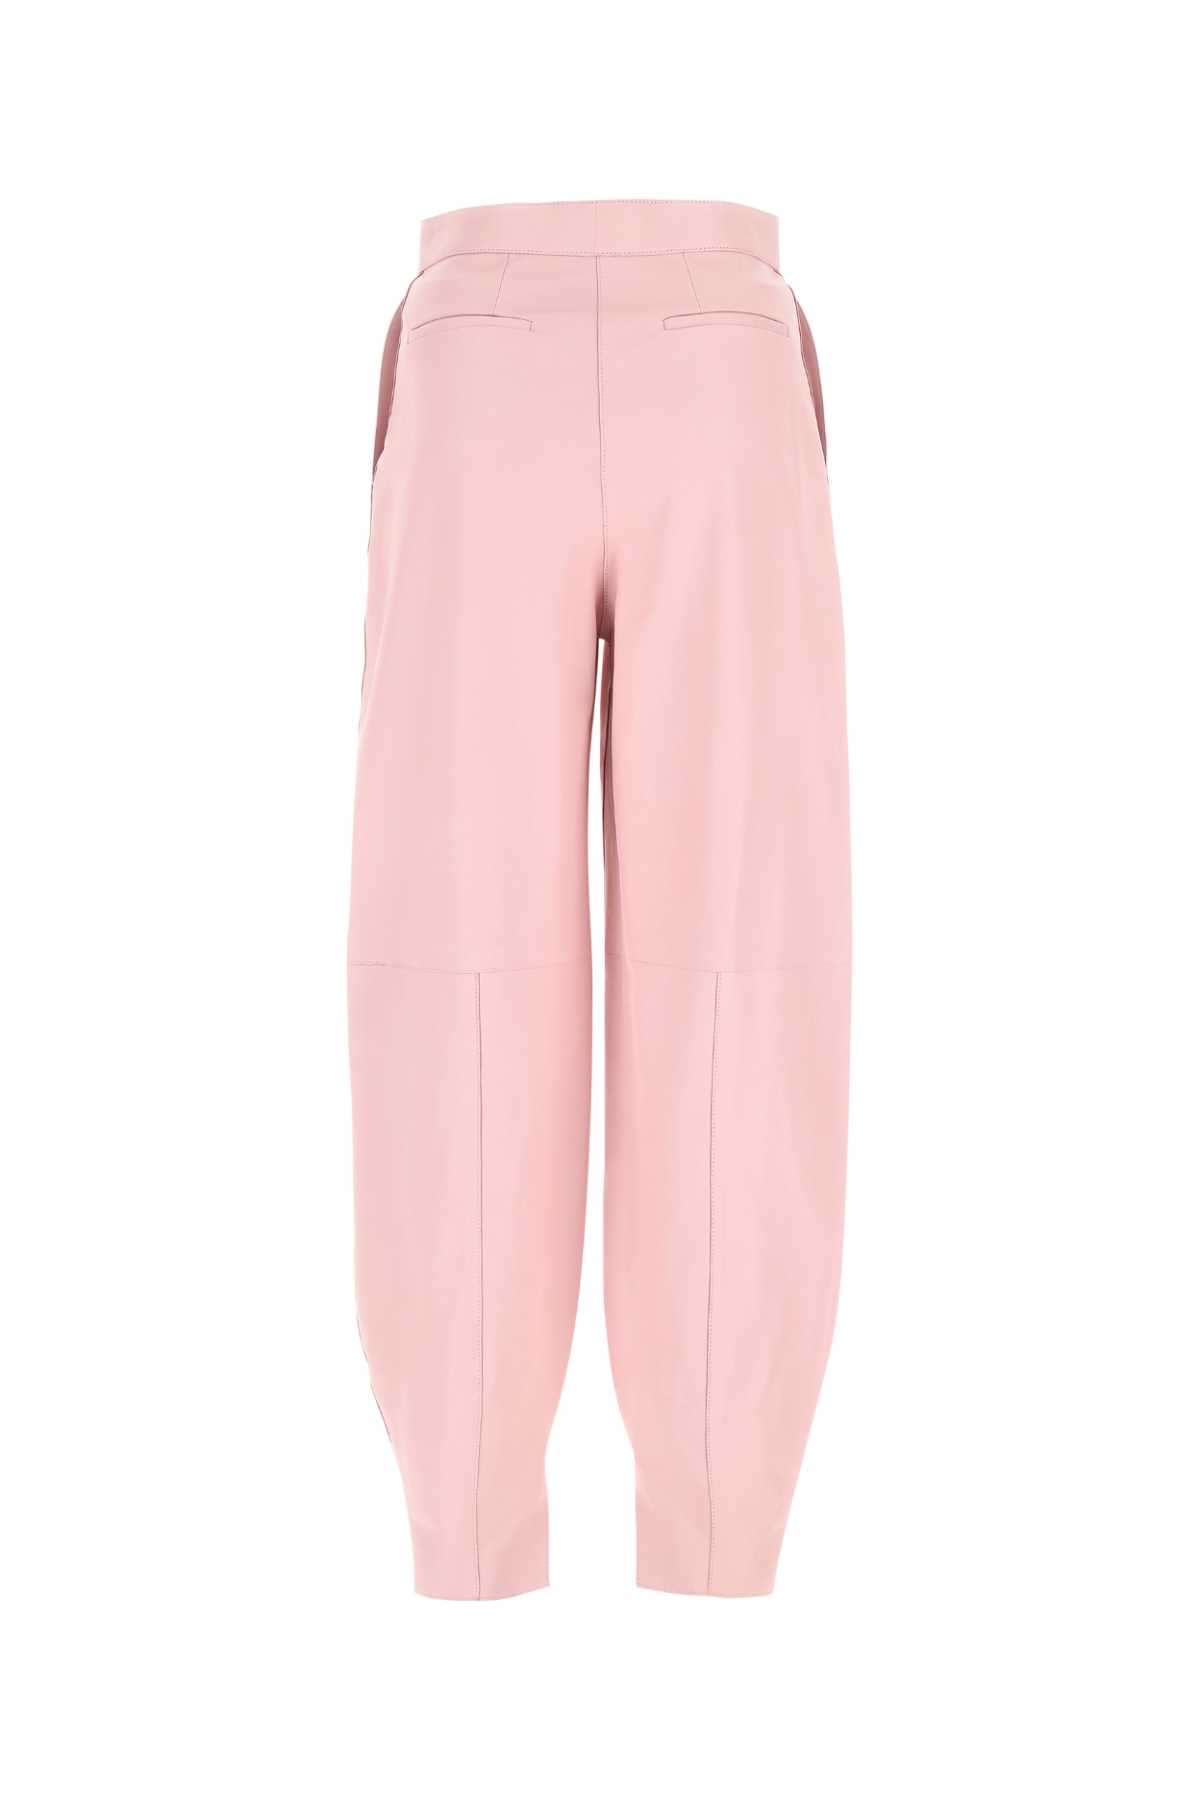 Loewe Pastel Pink Leather Trouser In Lightpink